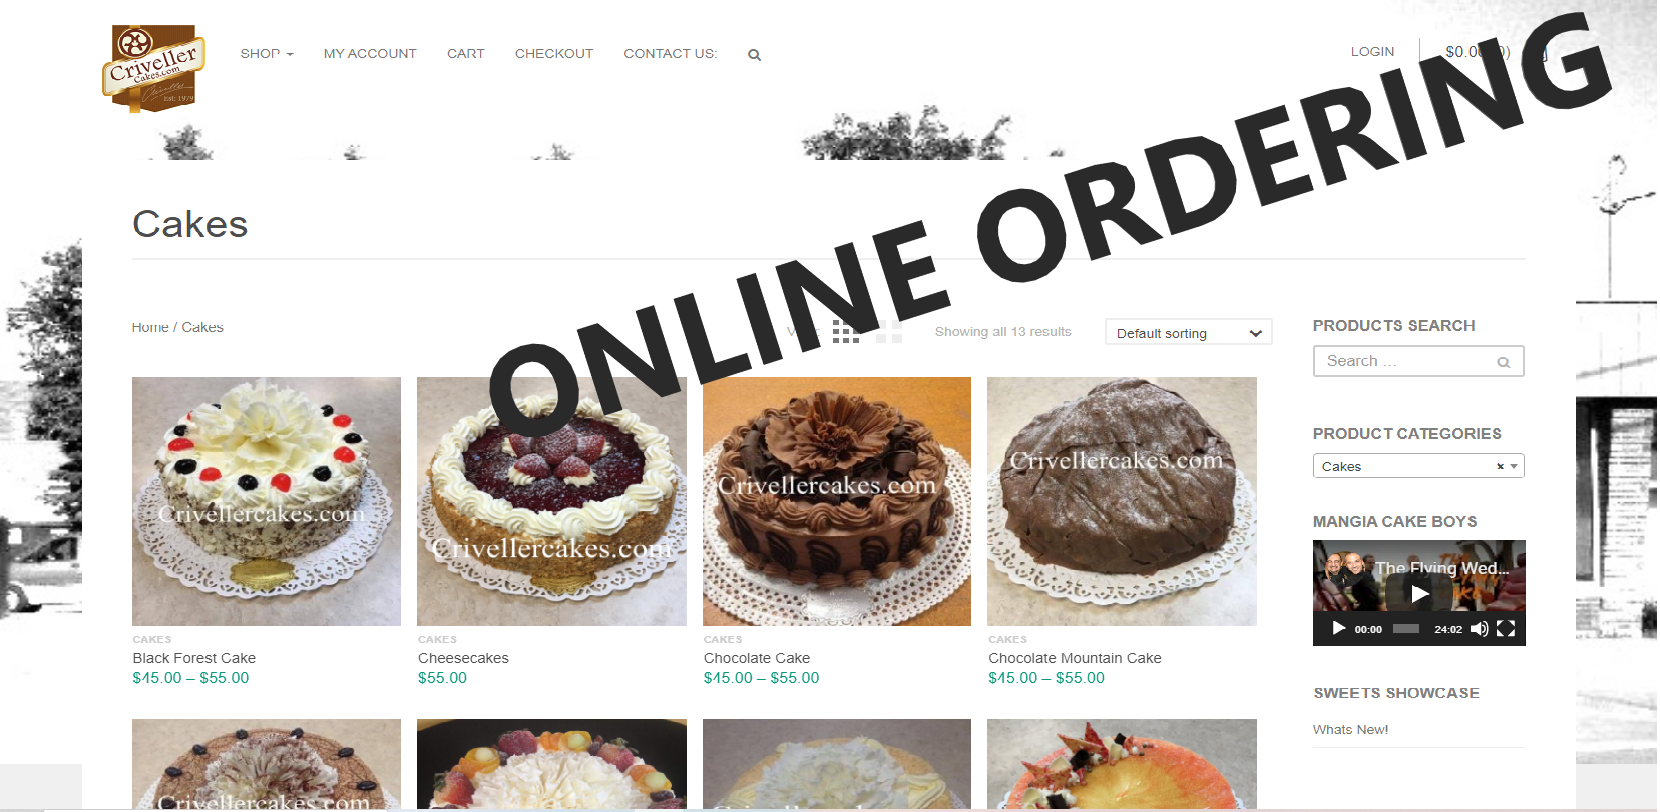 Crivellers Online Ordering